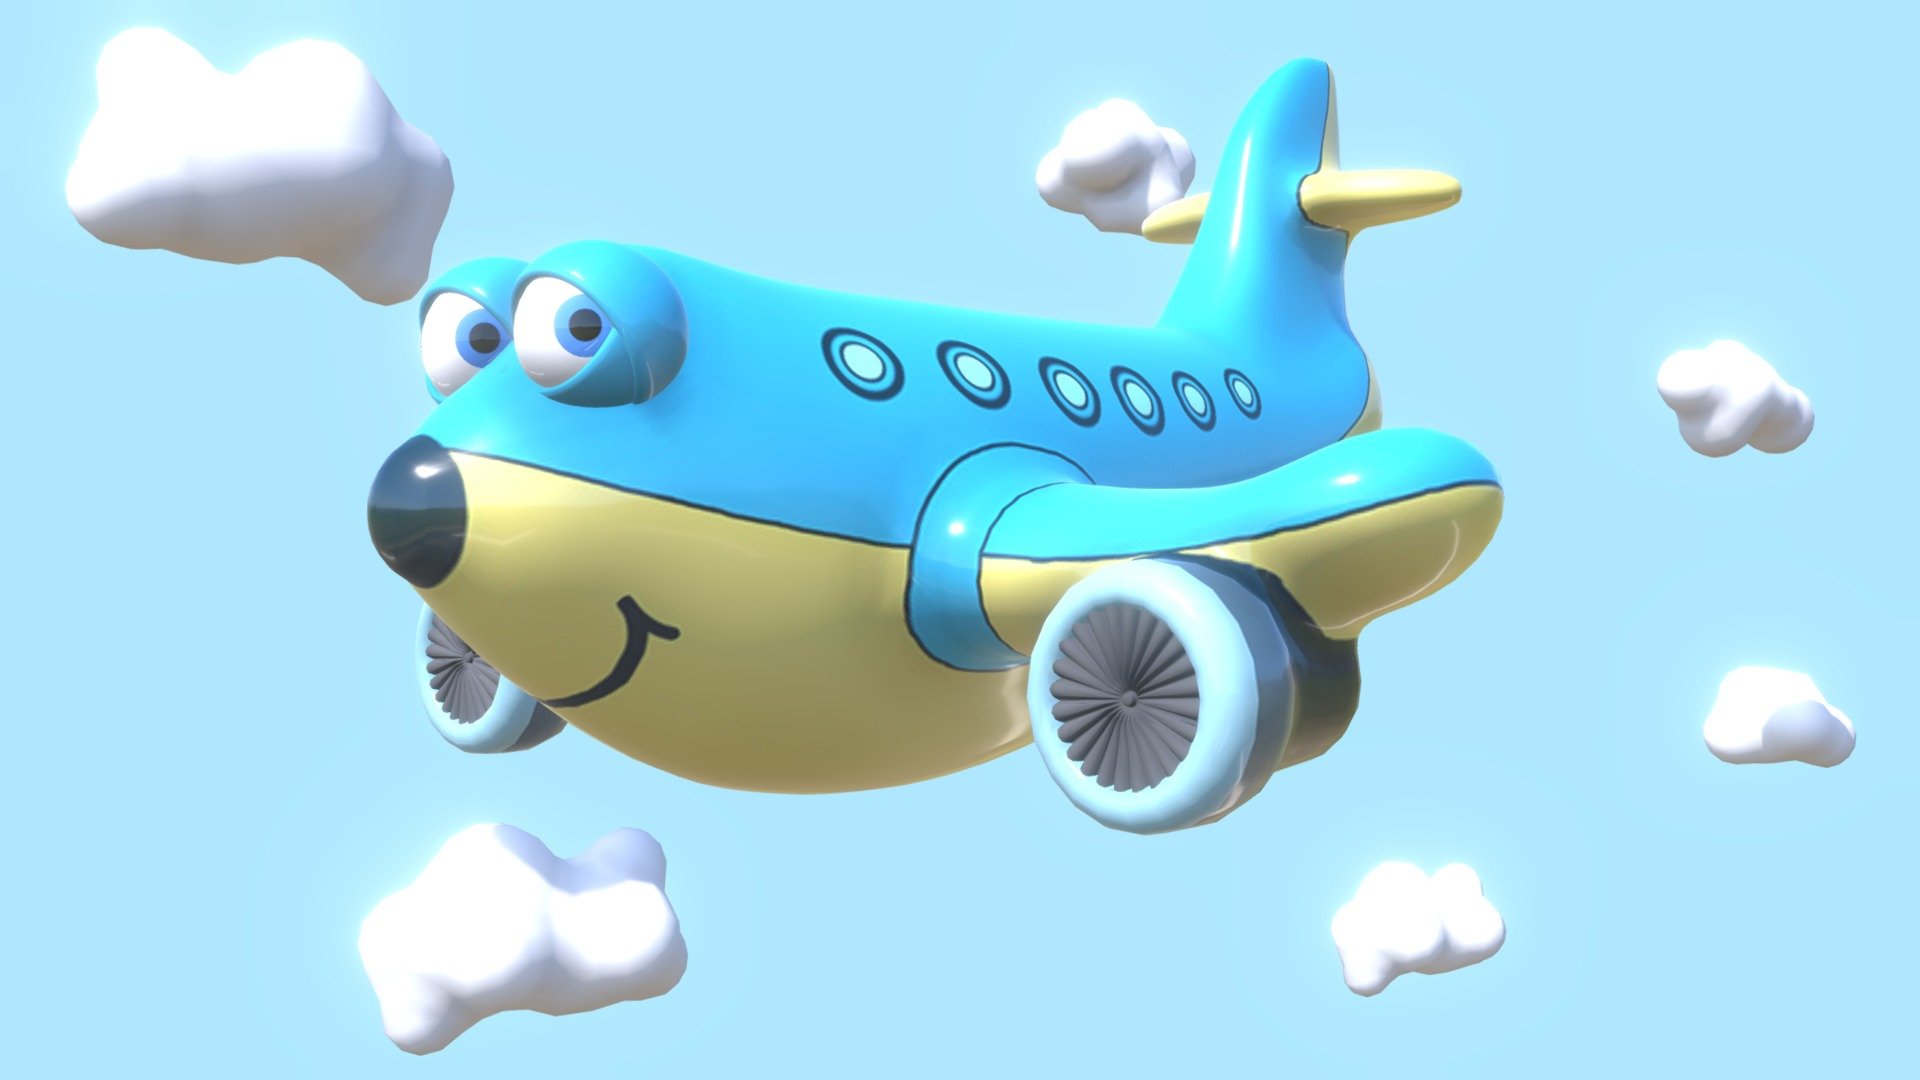 ArtStation - Flirting cartoon Airplane